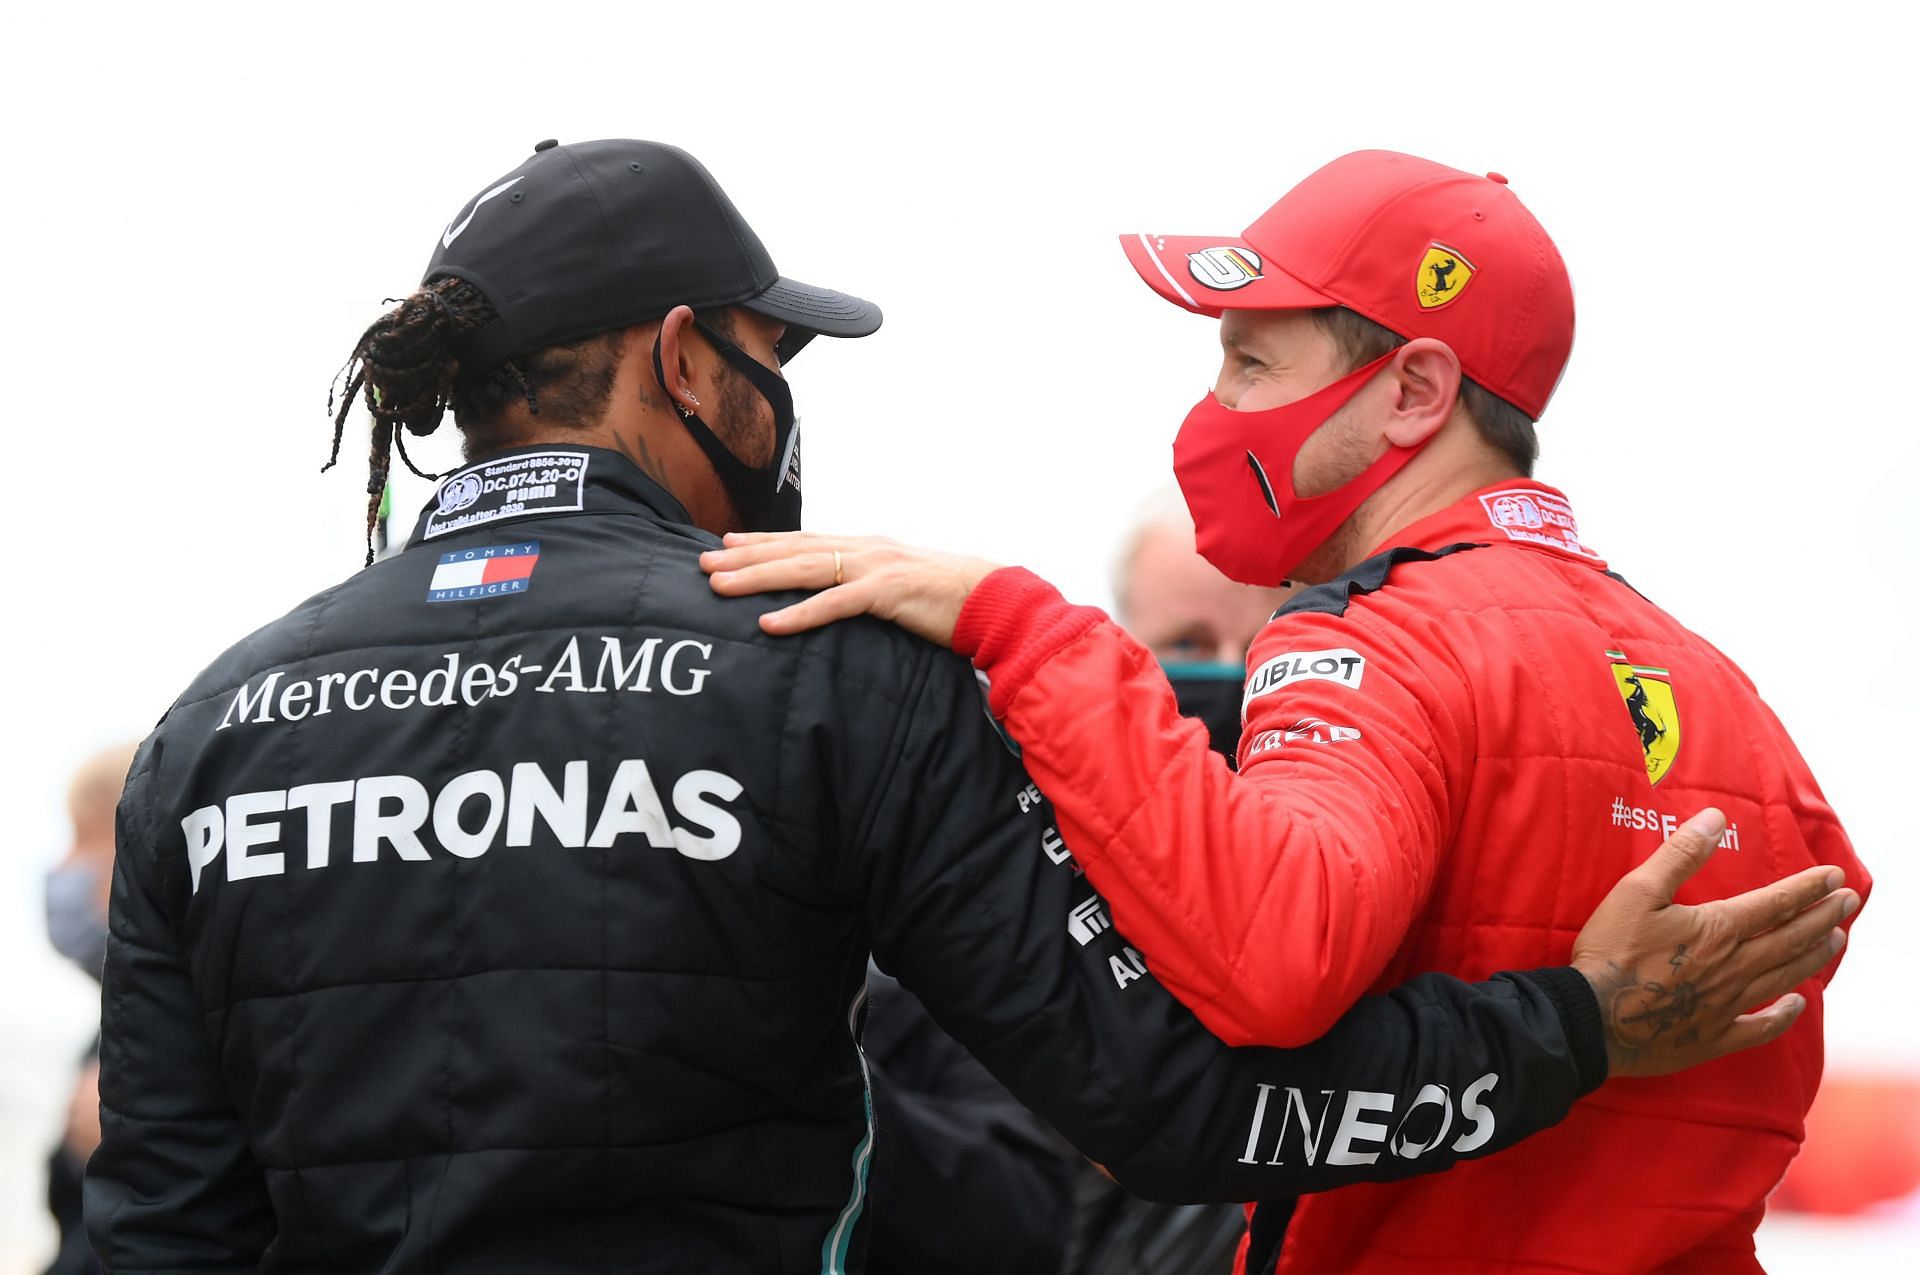 F1 Grand Prix of Turkey - Lewis Hamilton and Sebastian Vettel greet each other.